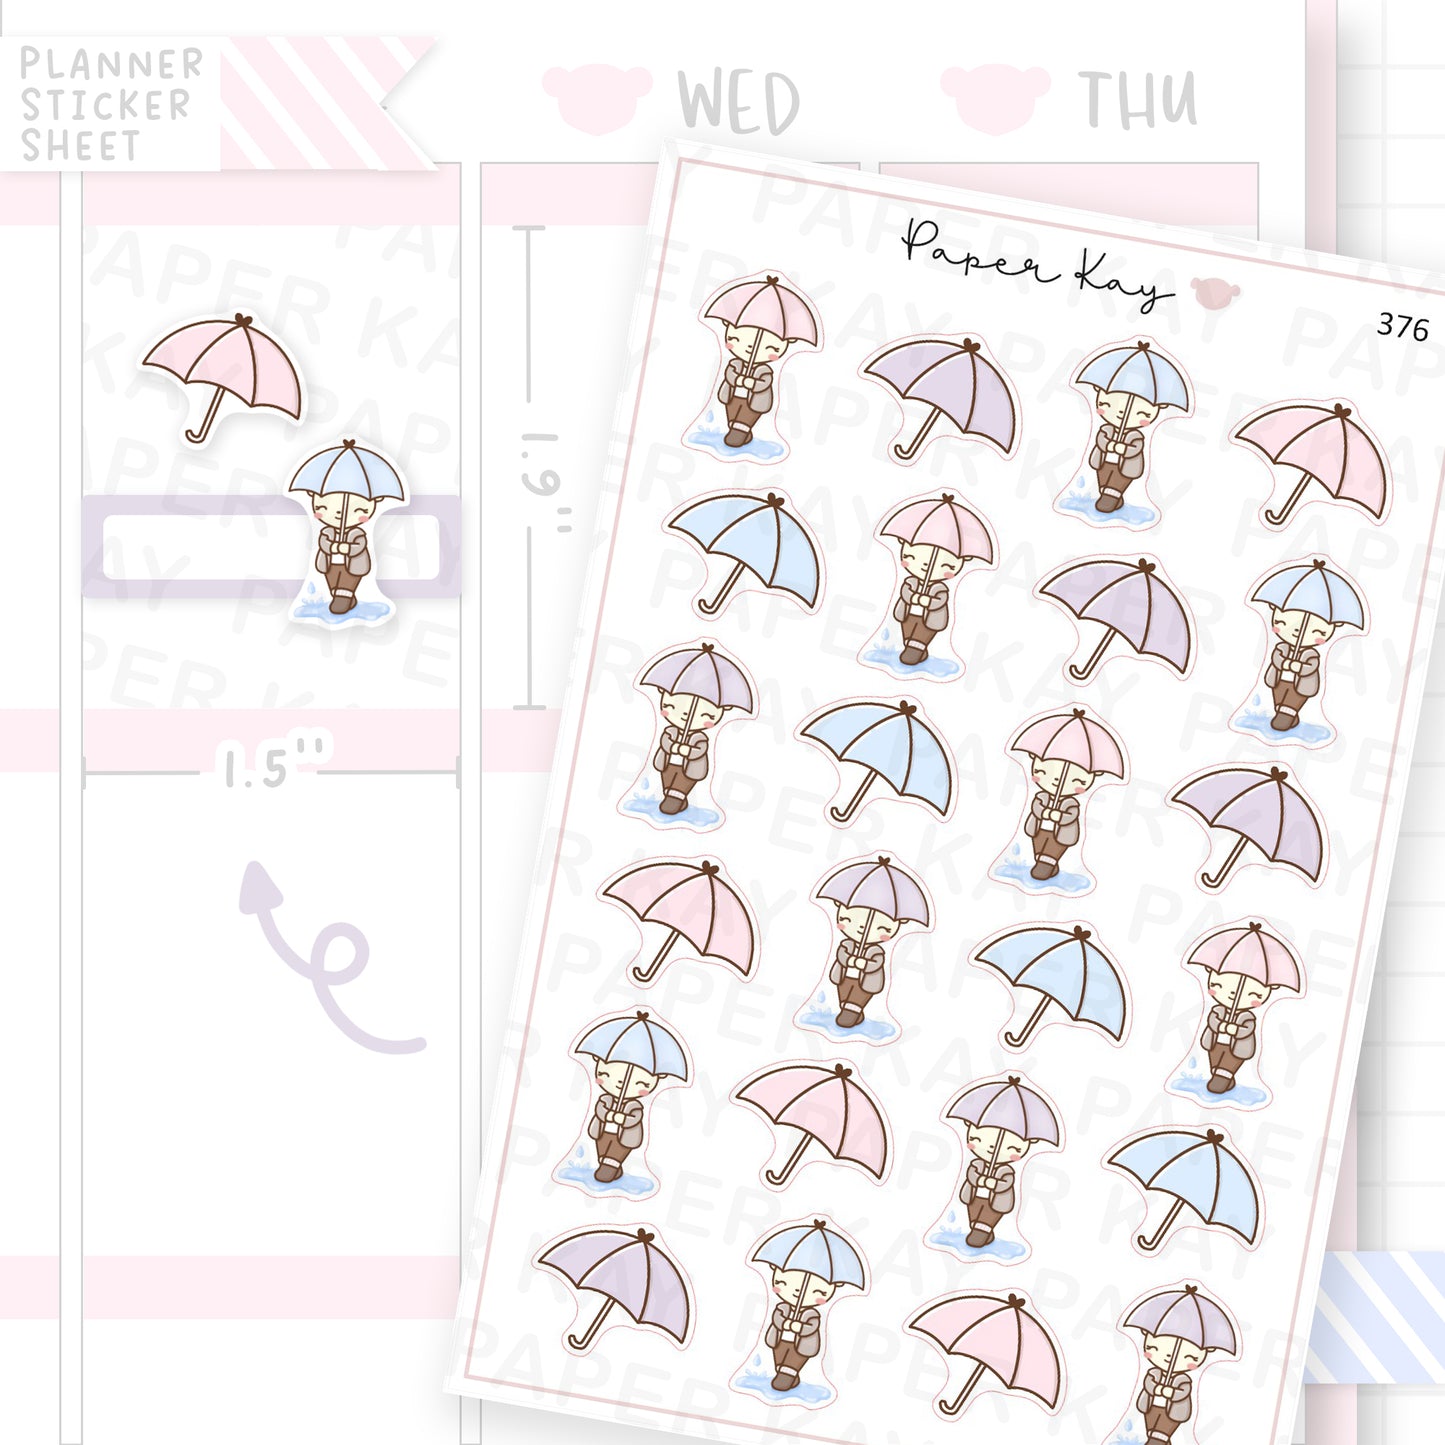 Rainy Walk Sticker Sheet